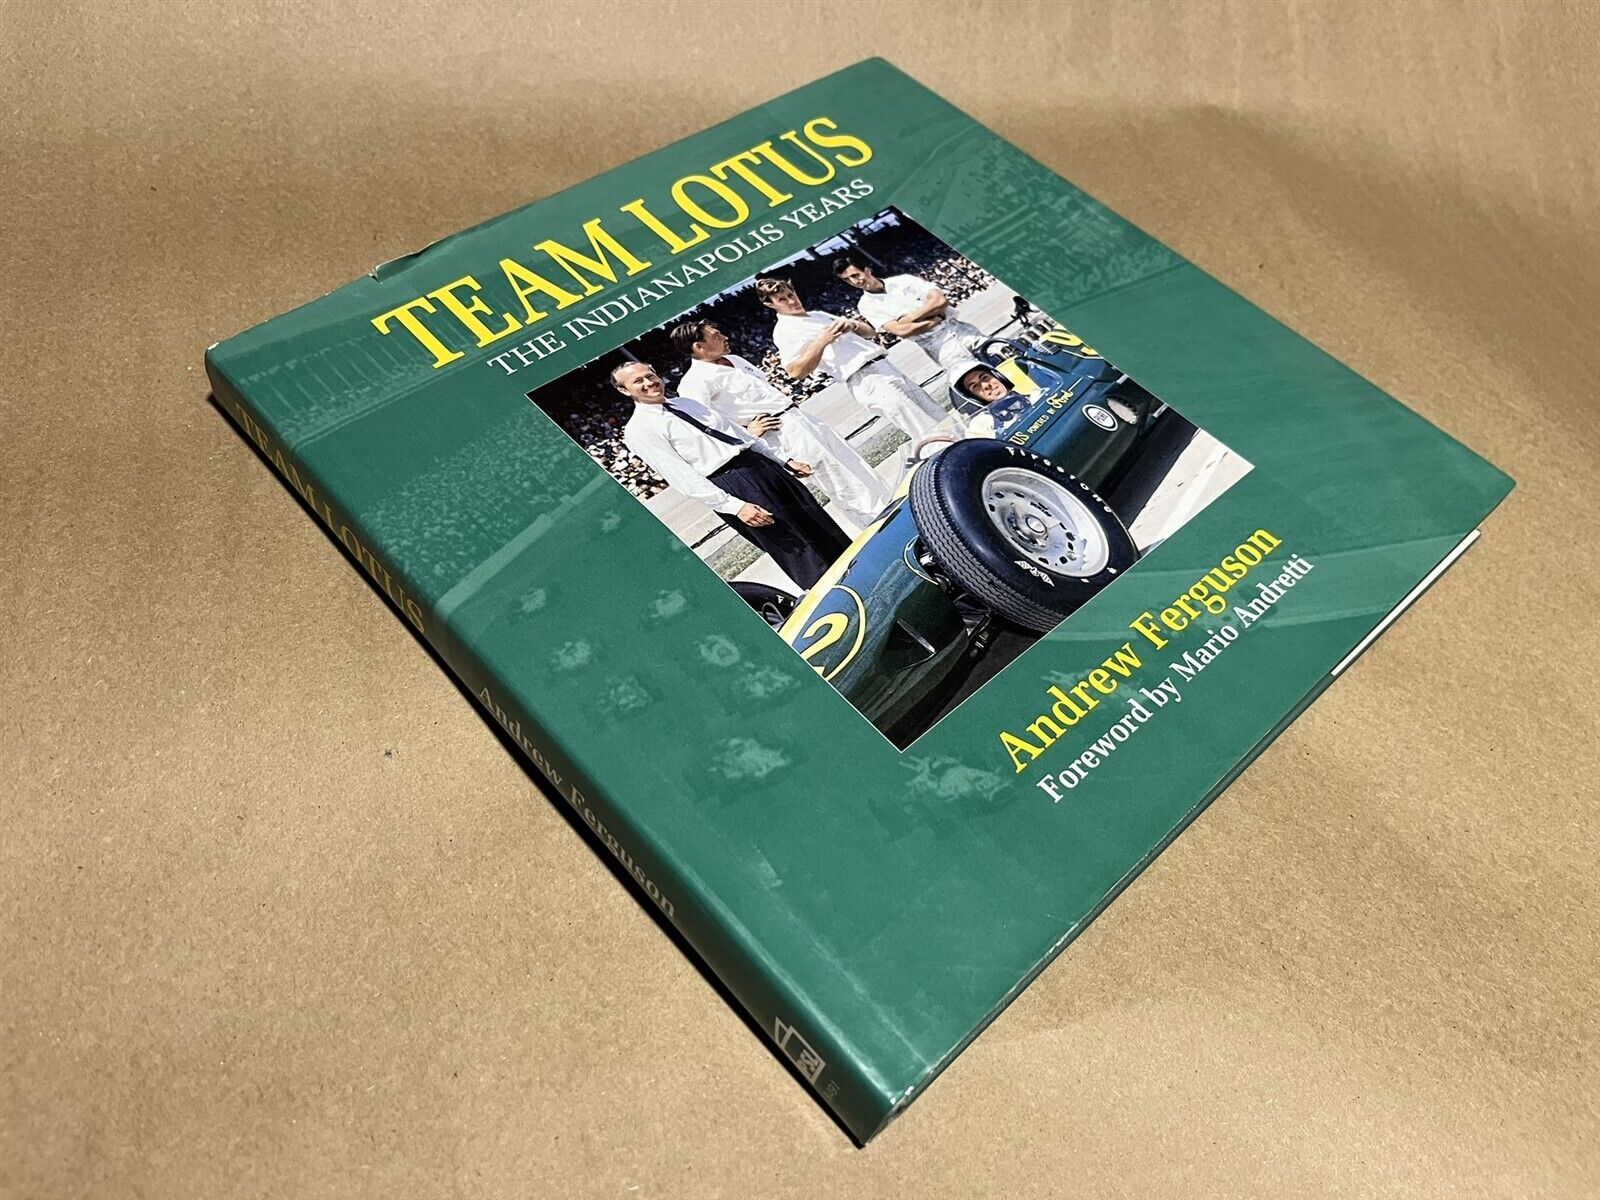 Book Lotus Team Lotus The Indianapolis Years by Ferguson 1996